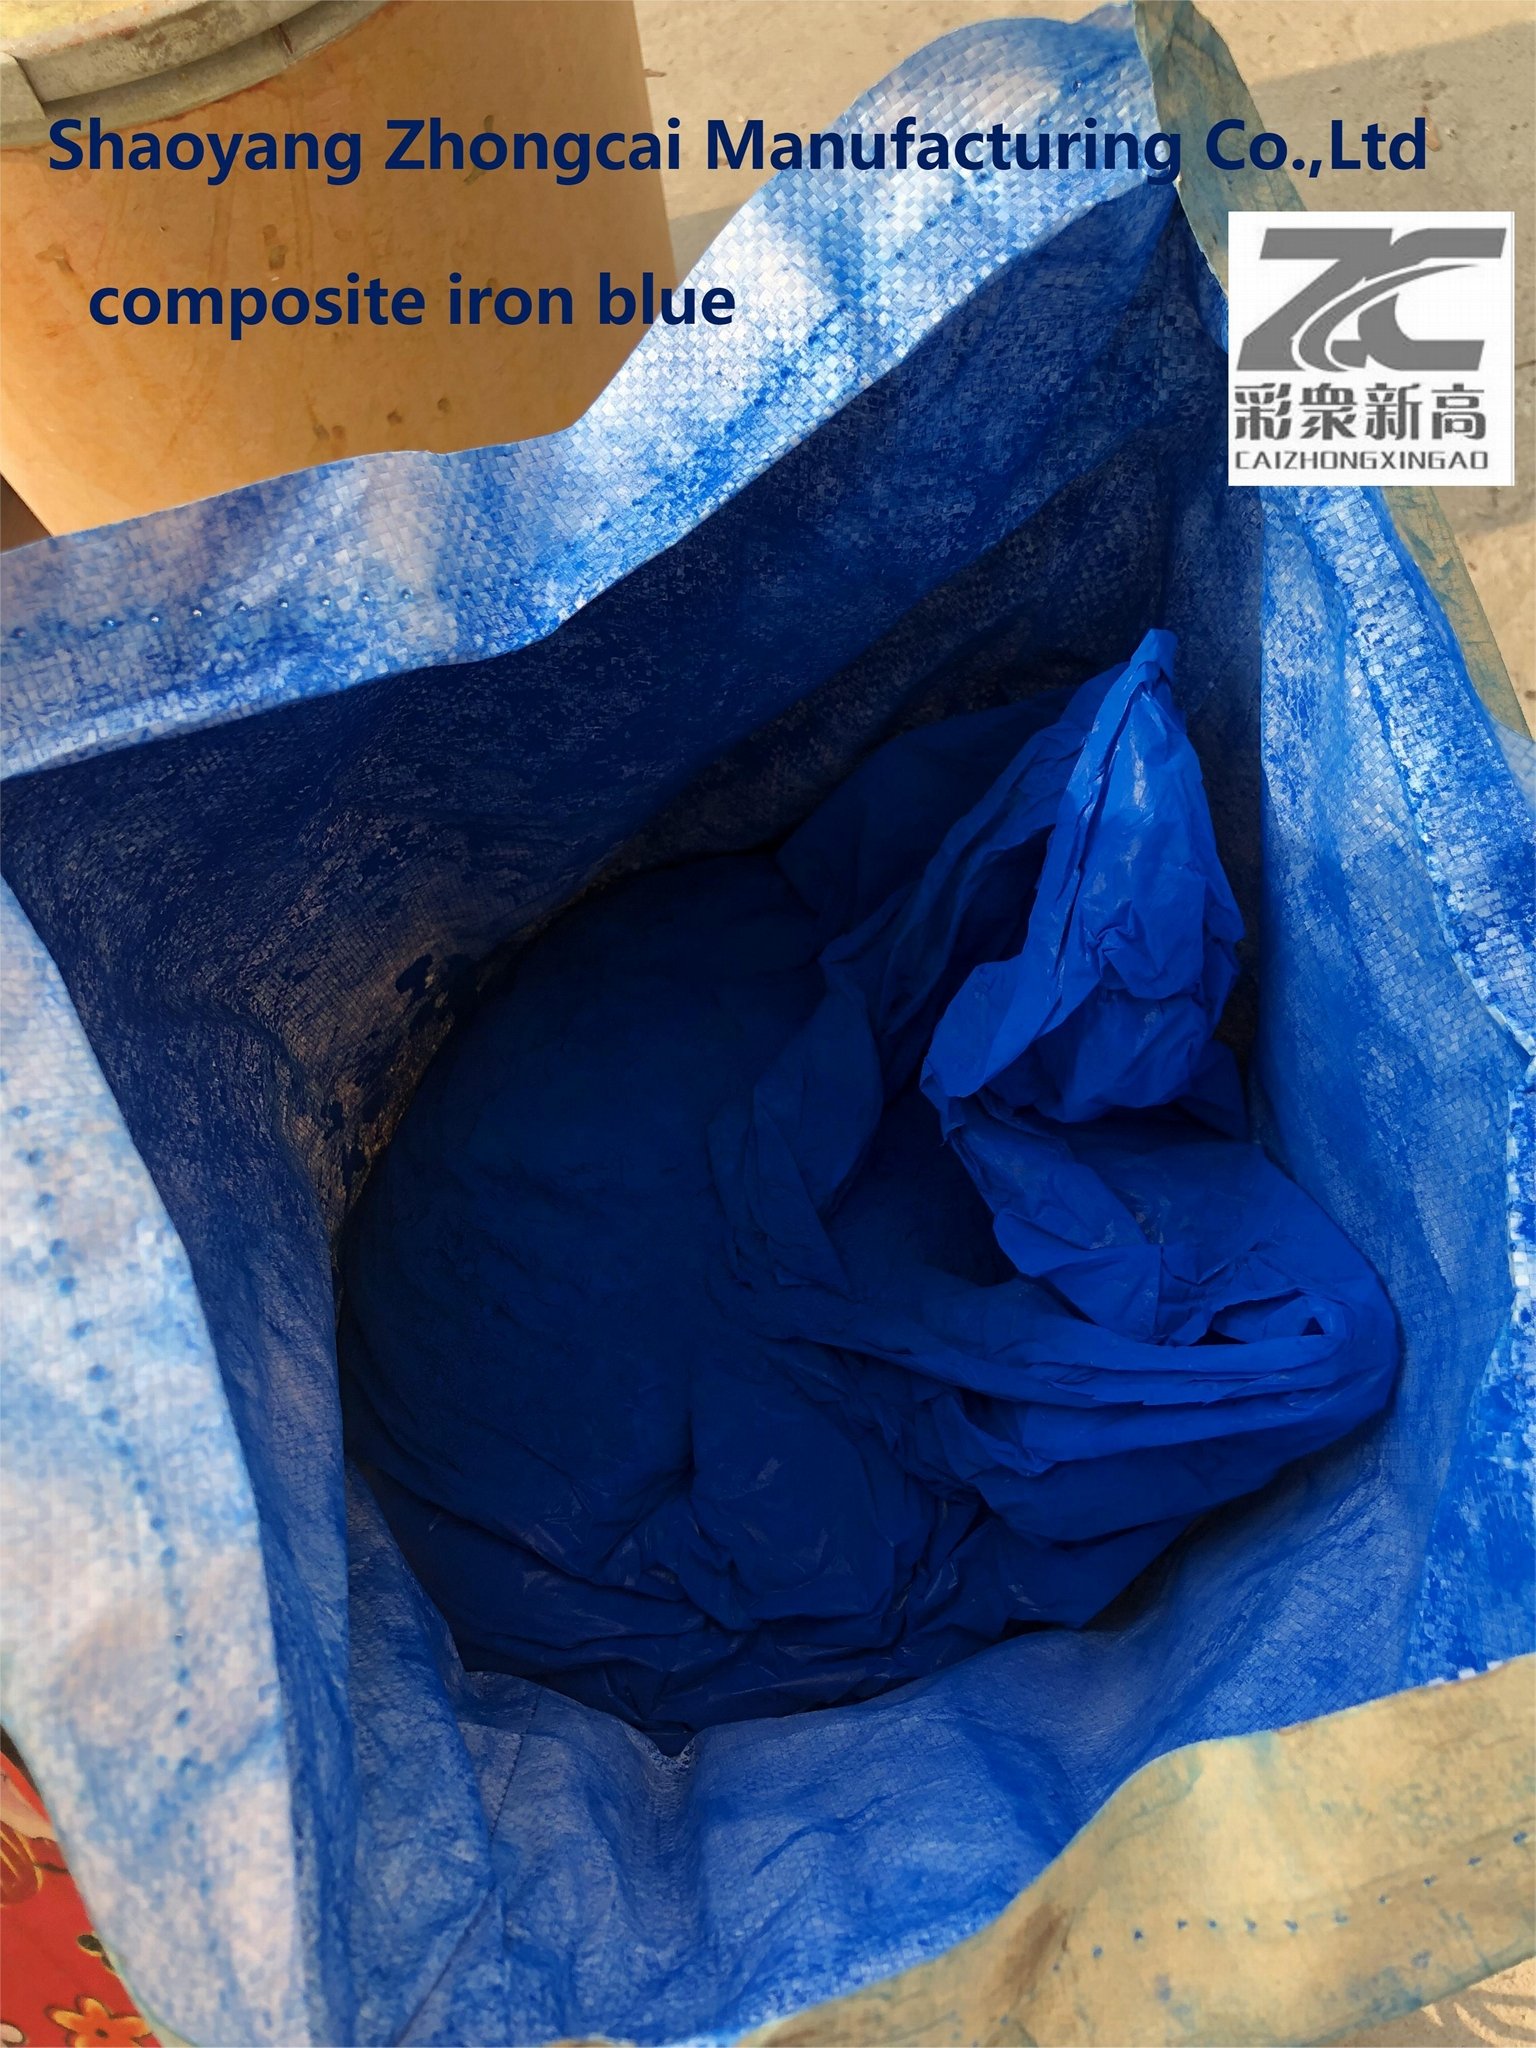 Composite Iron Blue 